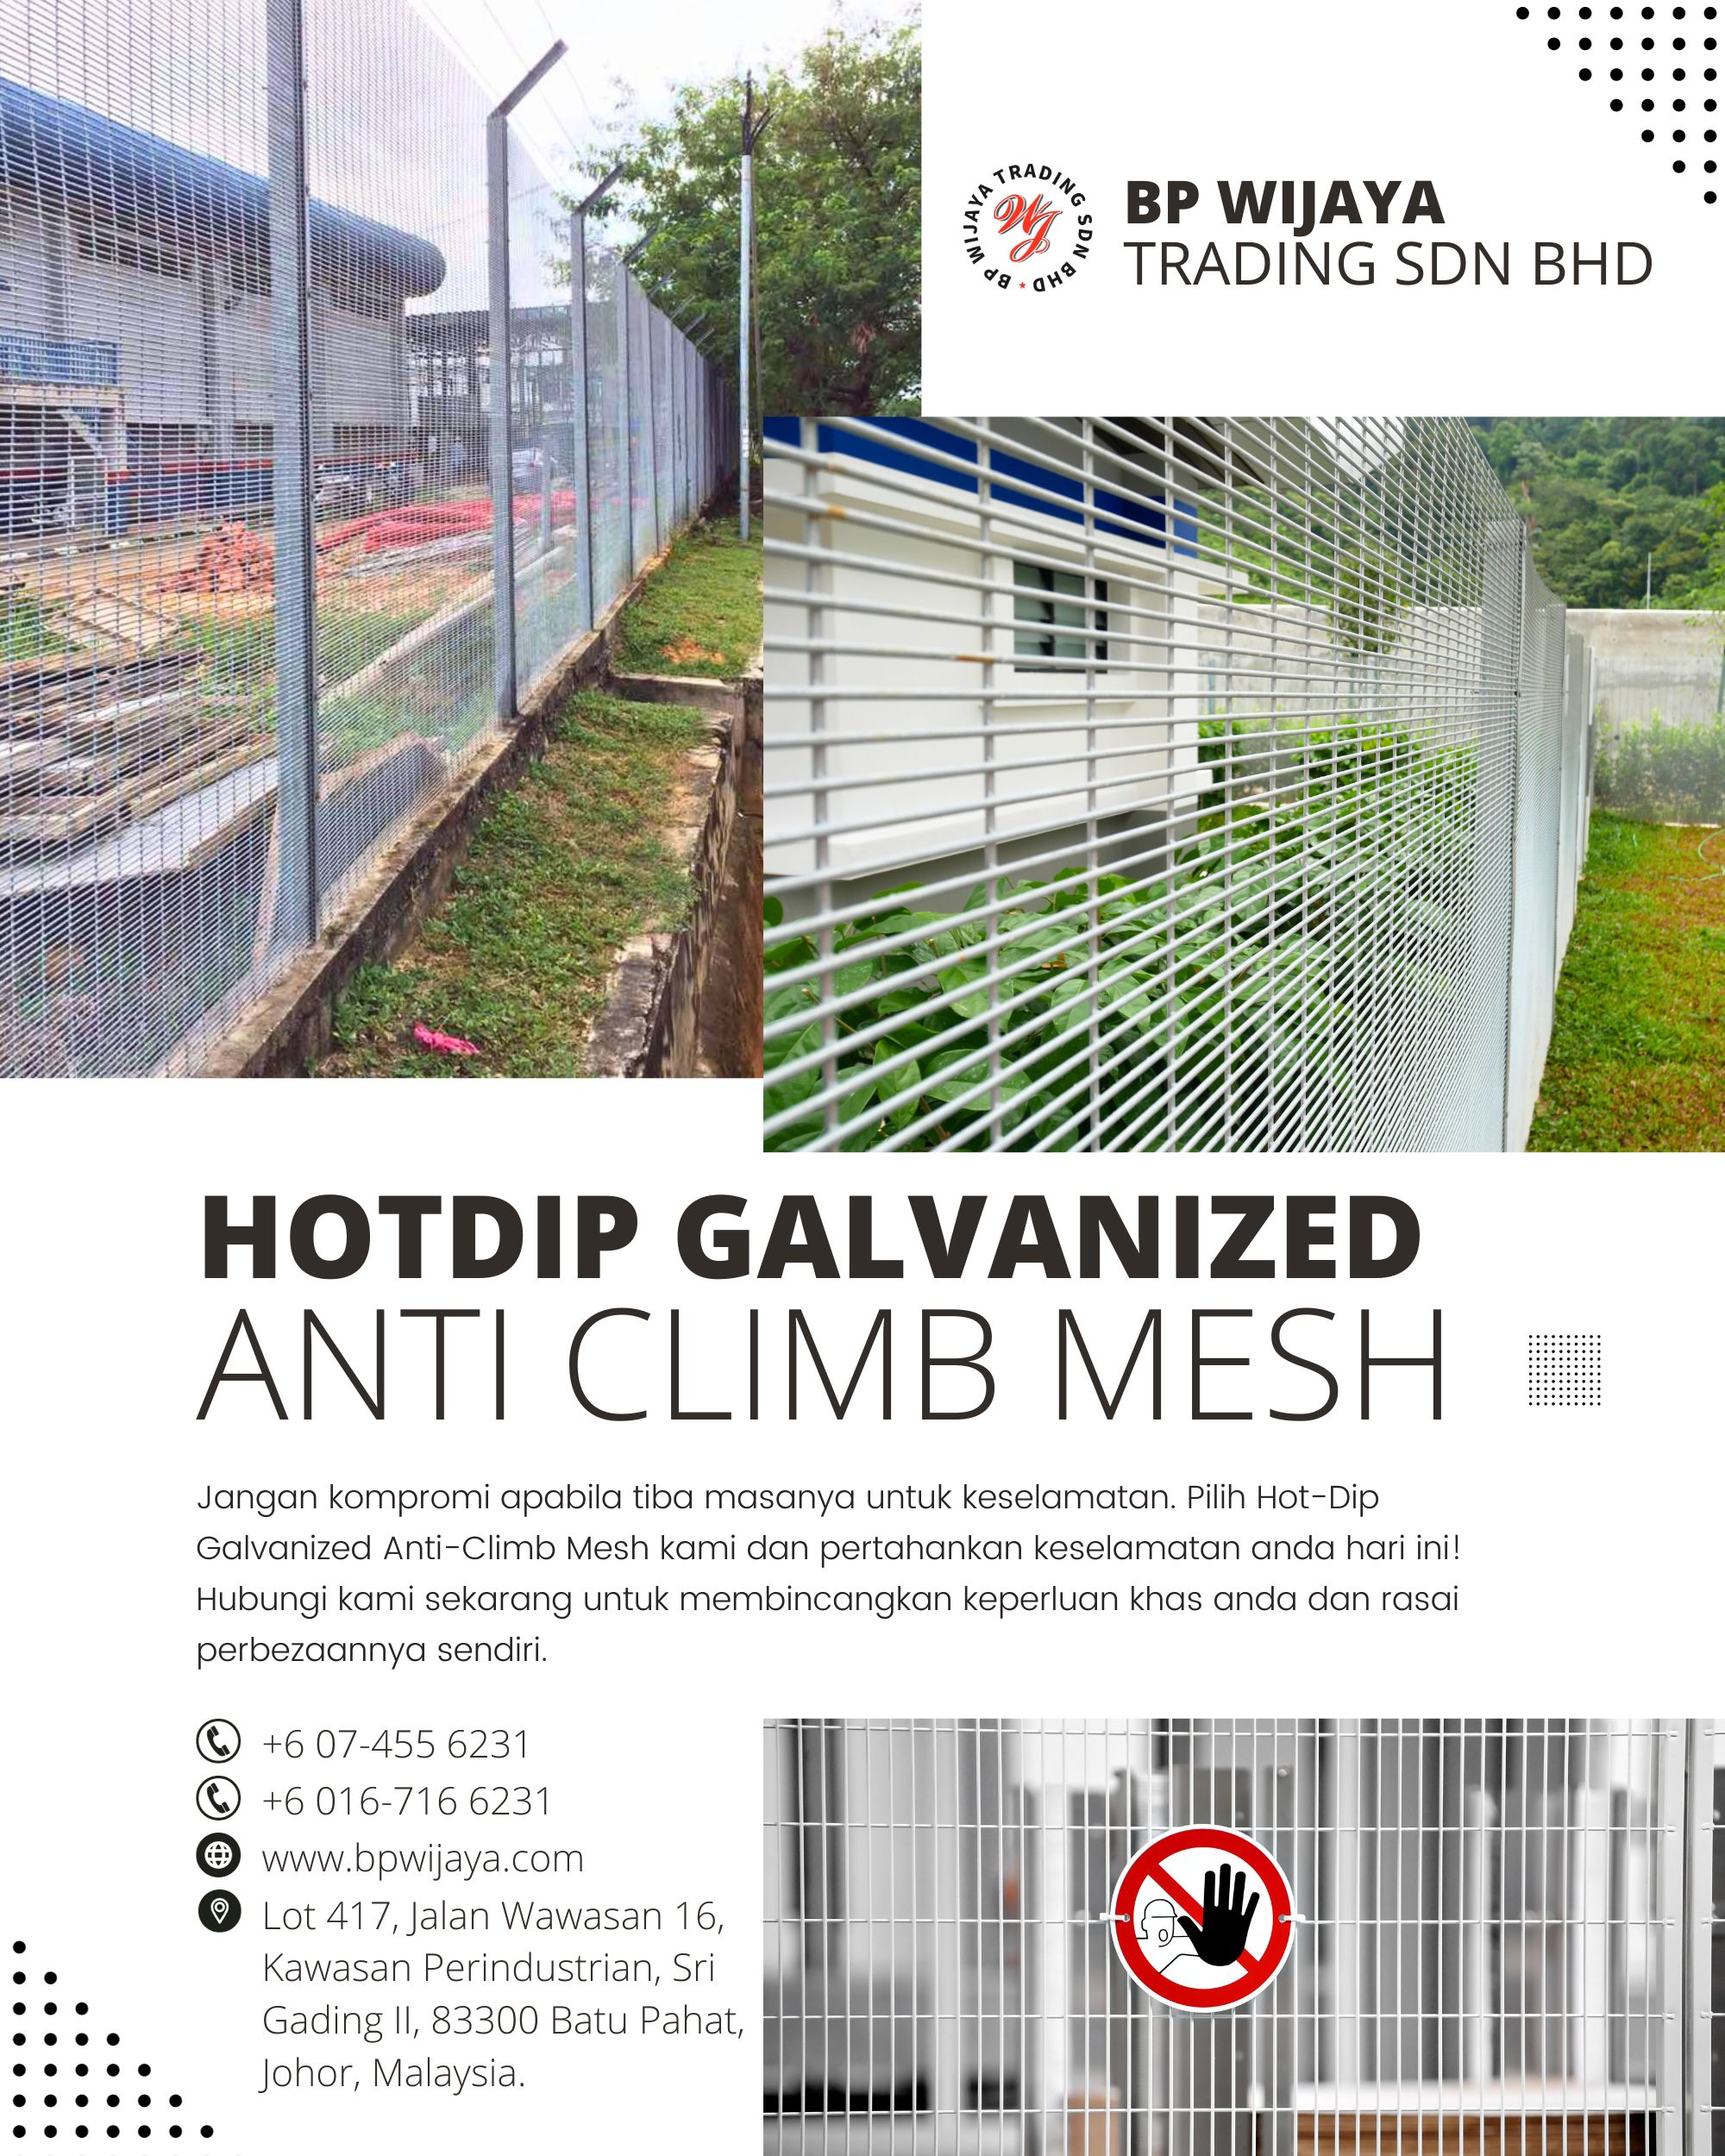 Hotdip Galvanized Anti Climb Mesh Malaysia BP Wijaya Trading Sdn Bhd Wire Mesh Manufacturer Malaysia